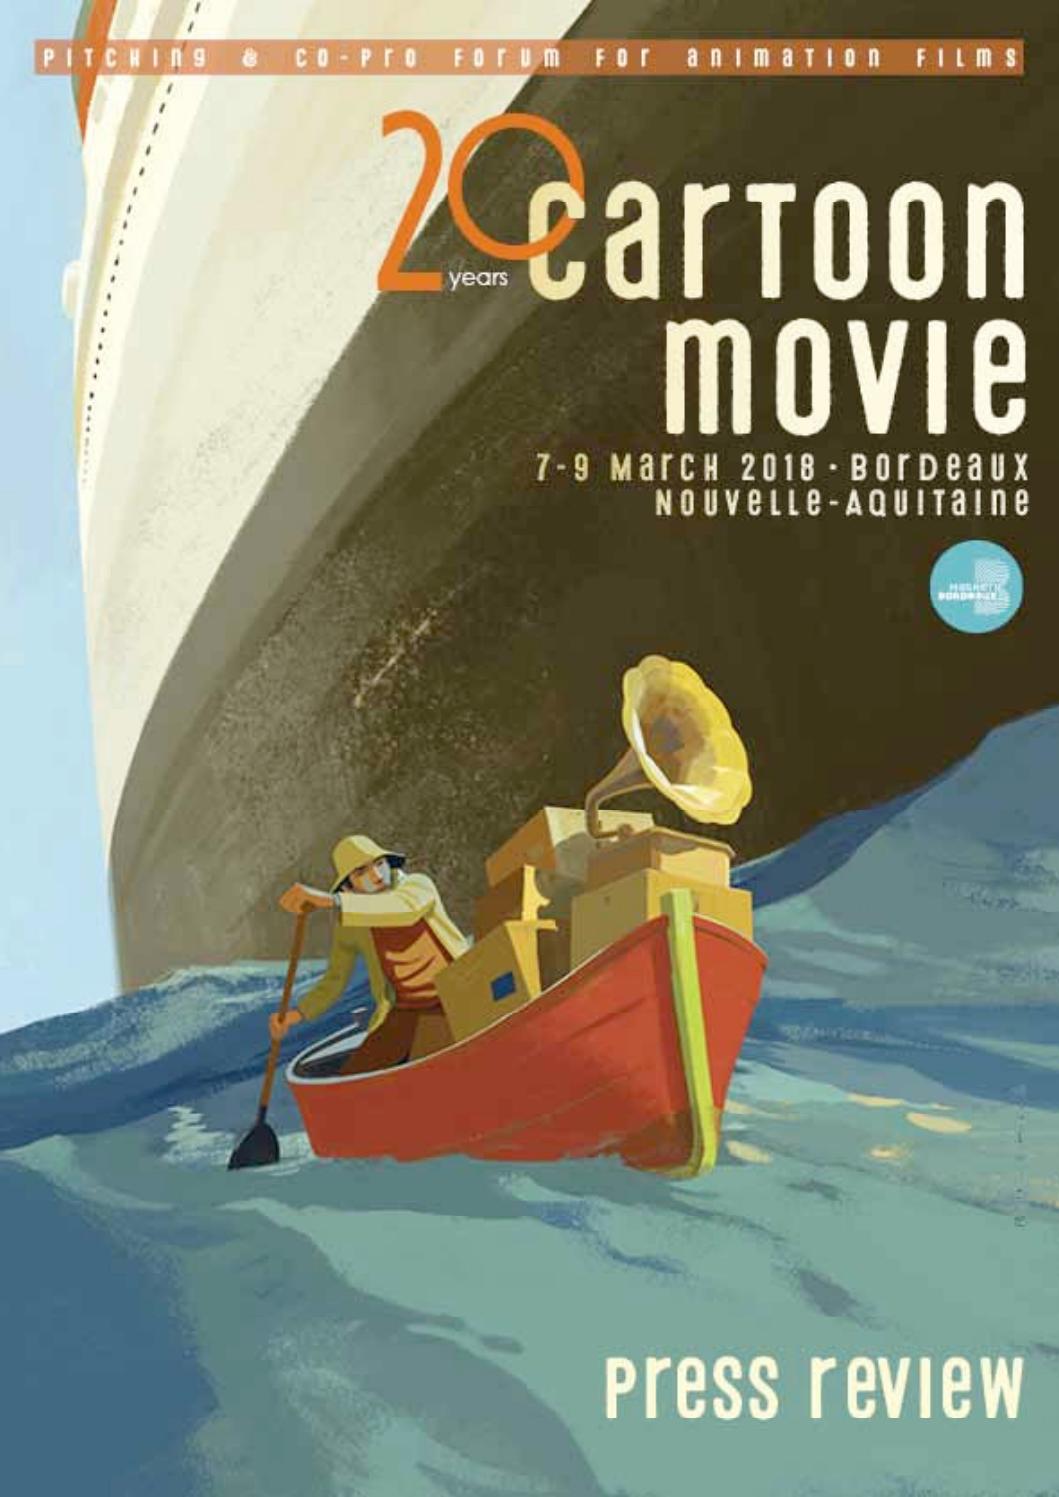 Cafard De Jardin Luxe Movie 2018 Press Review by Cartoon issuu